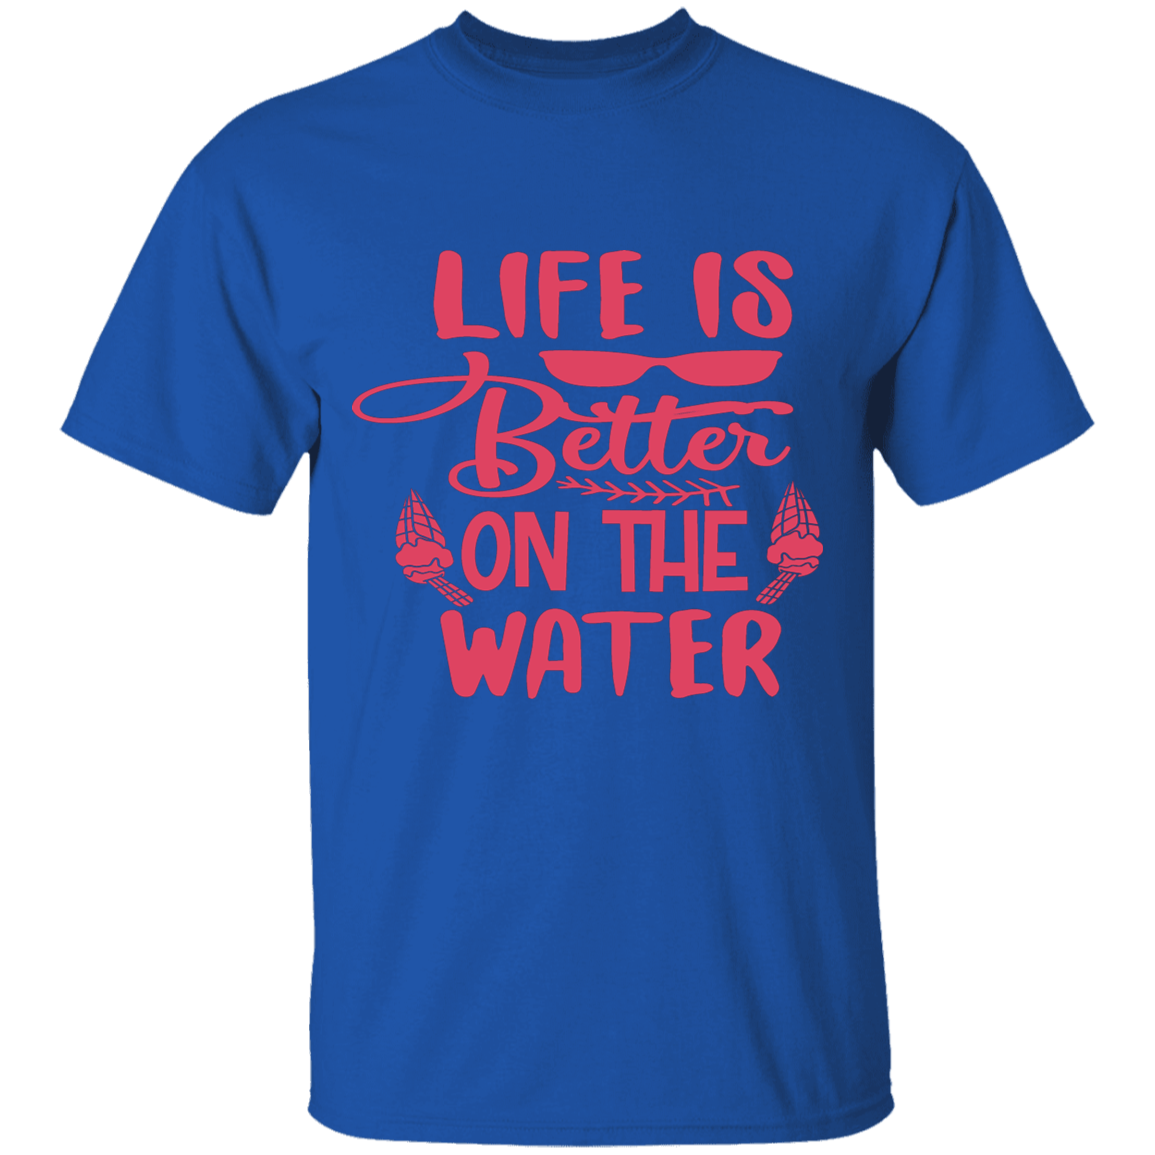 Life's better water T-Shirt (r)